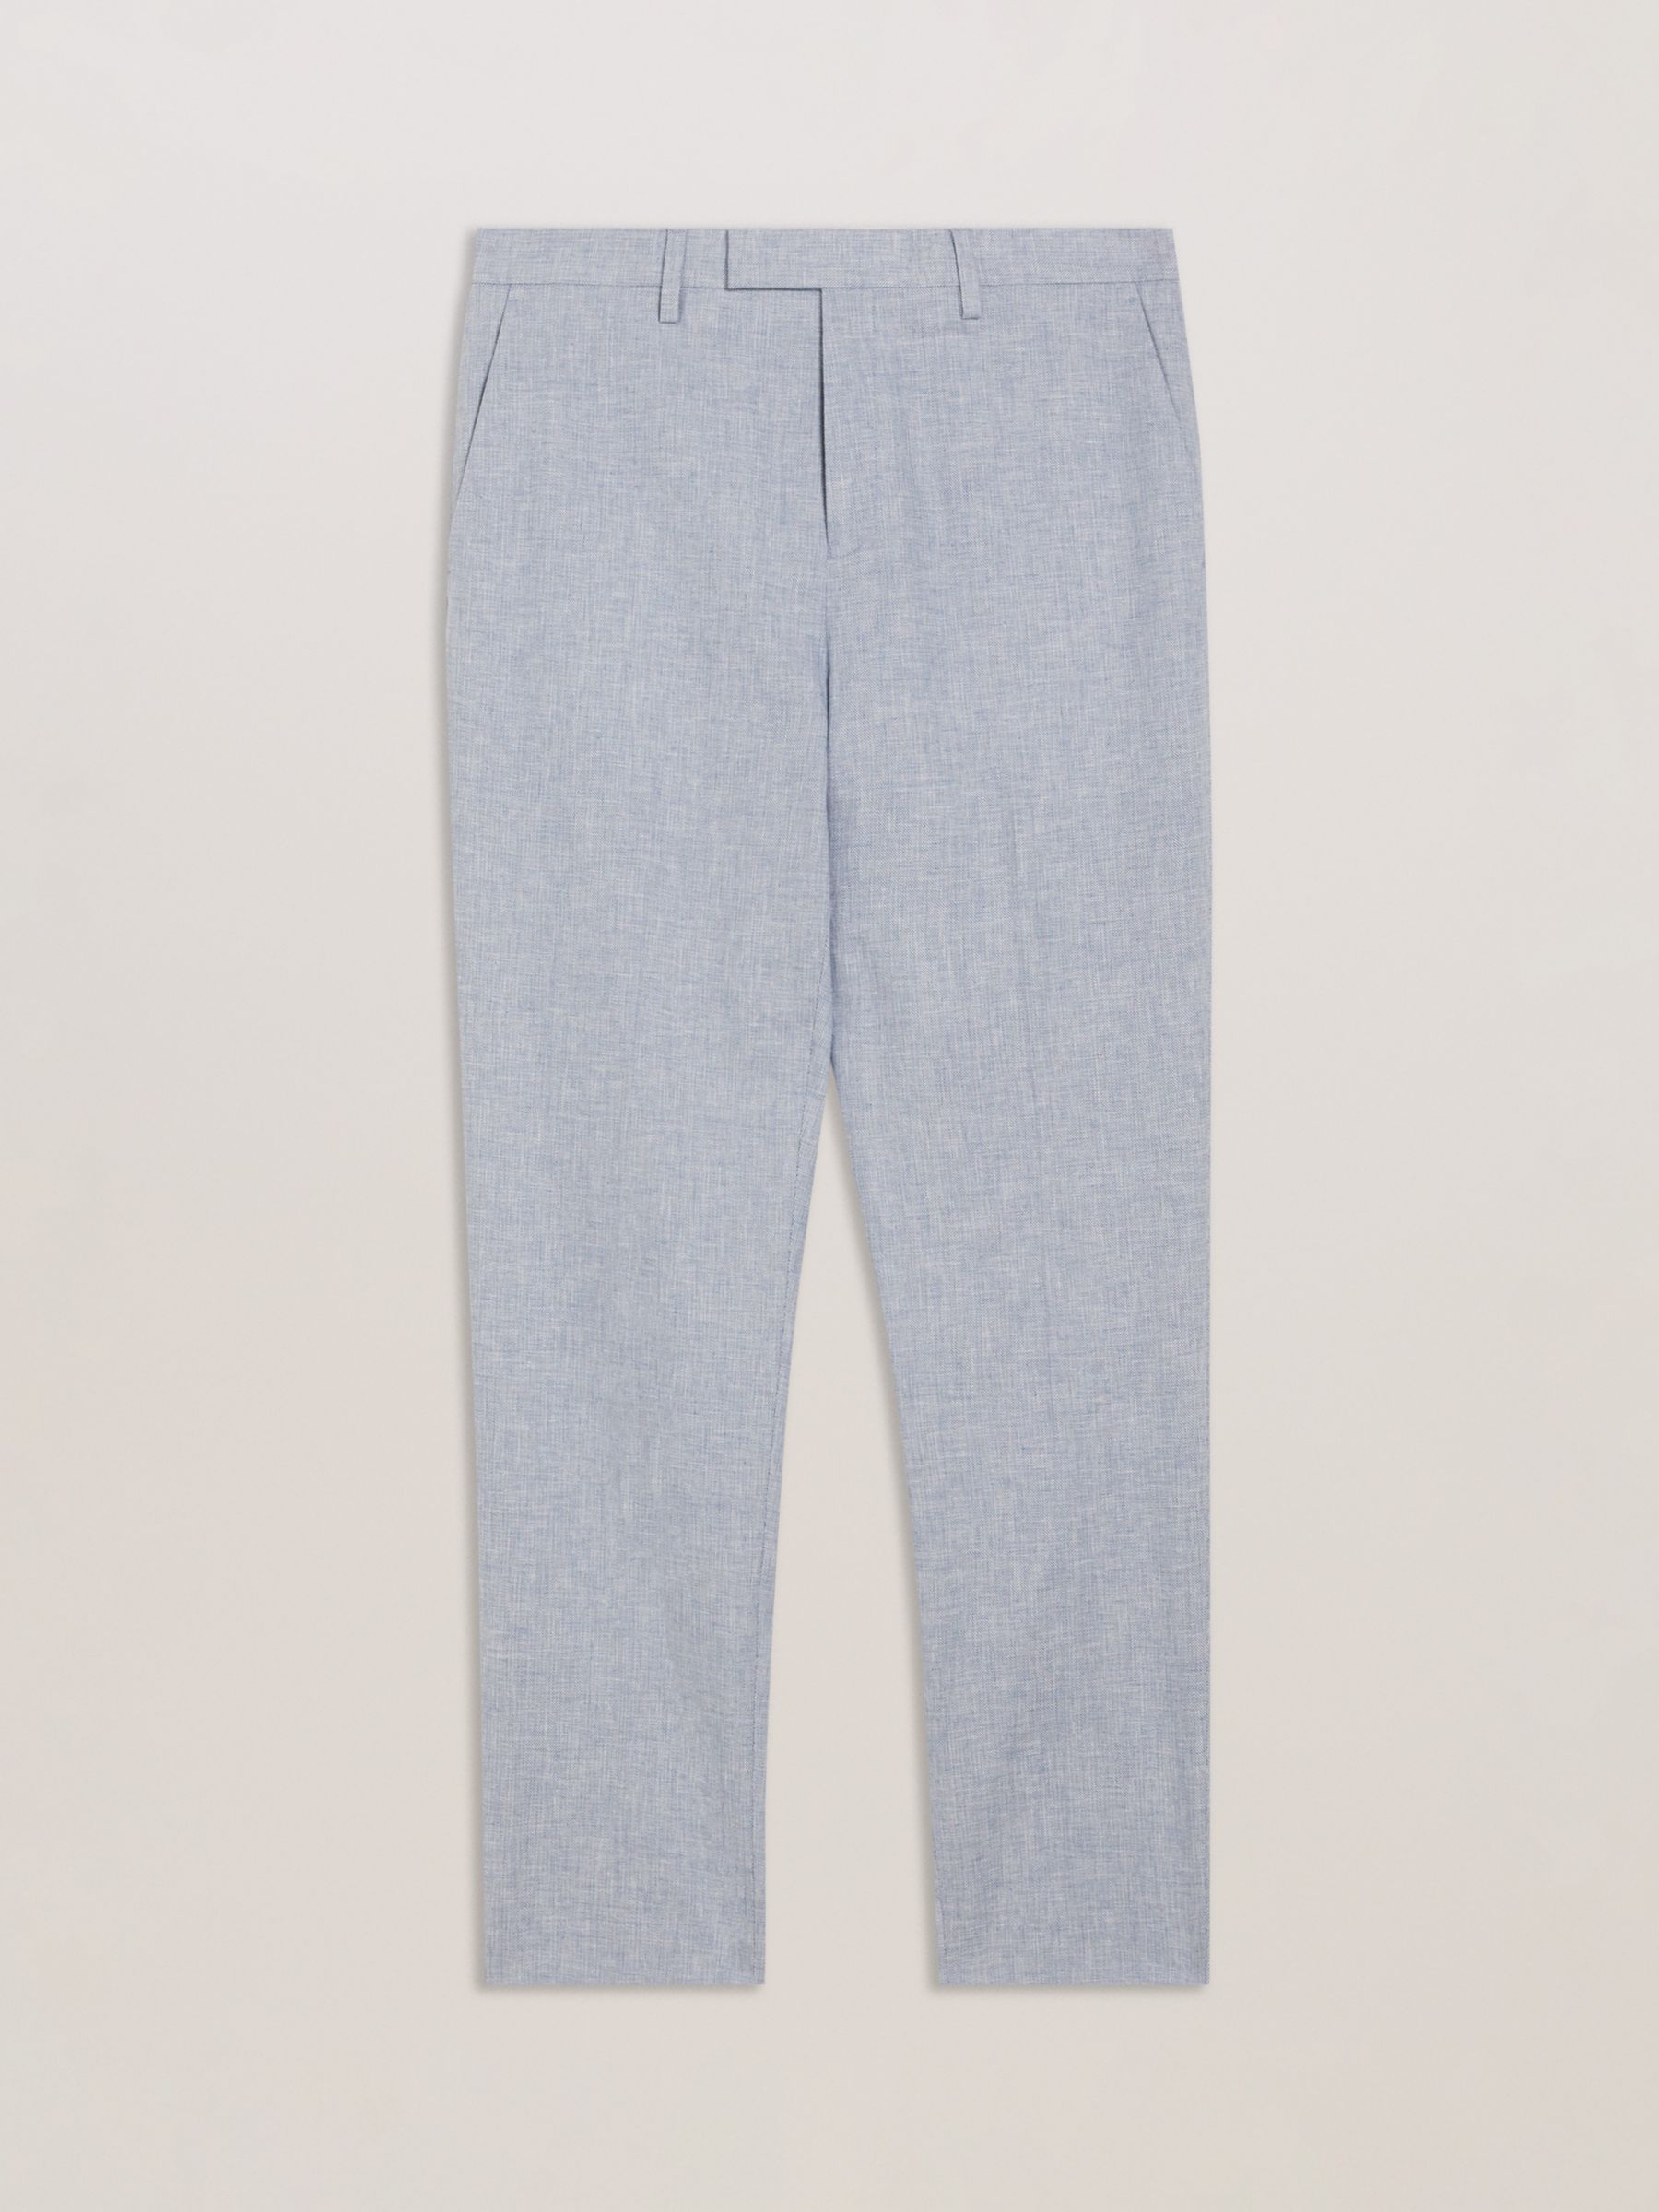 Ted Baker Damaskt Slim Cotton Linen Trousers, Blue Light, 28R